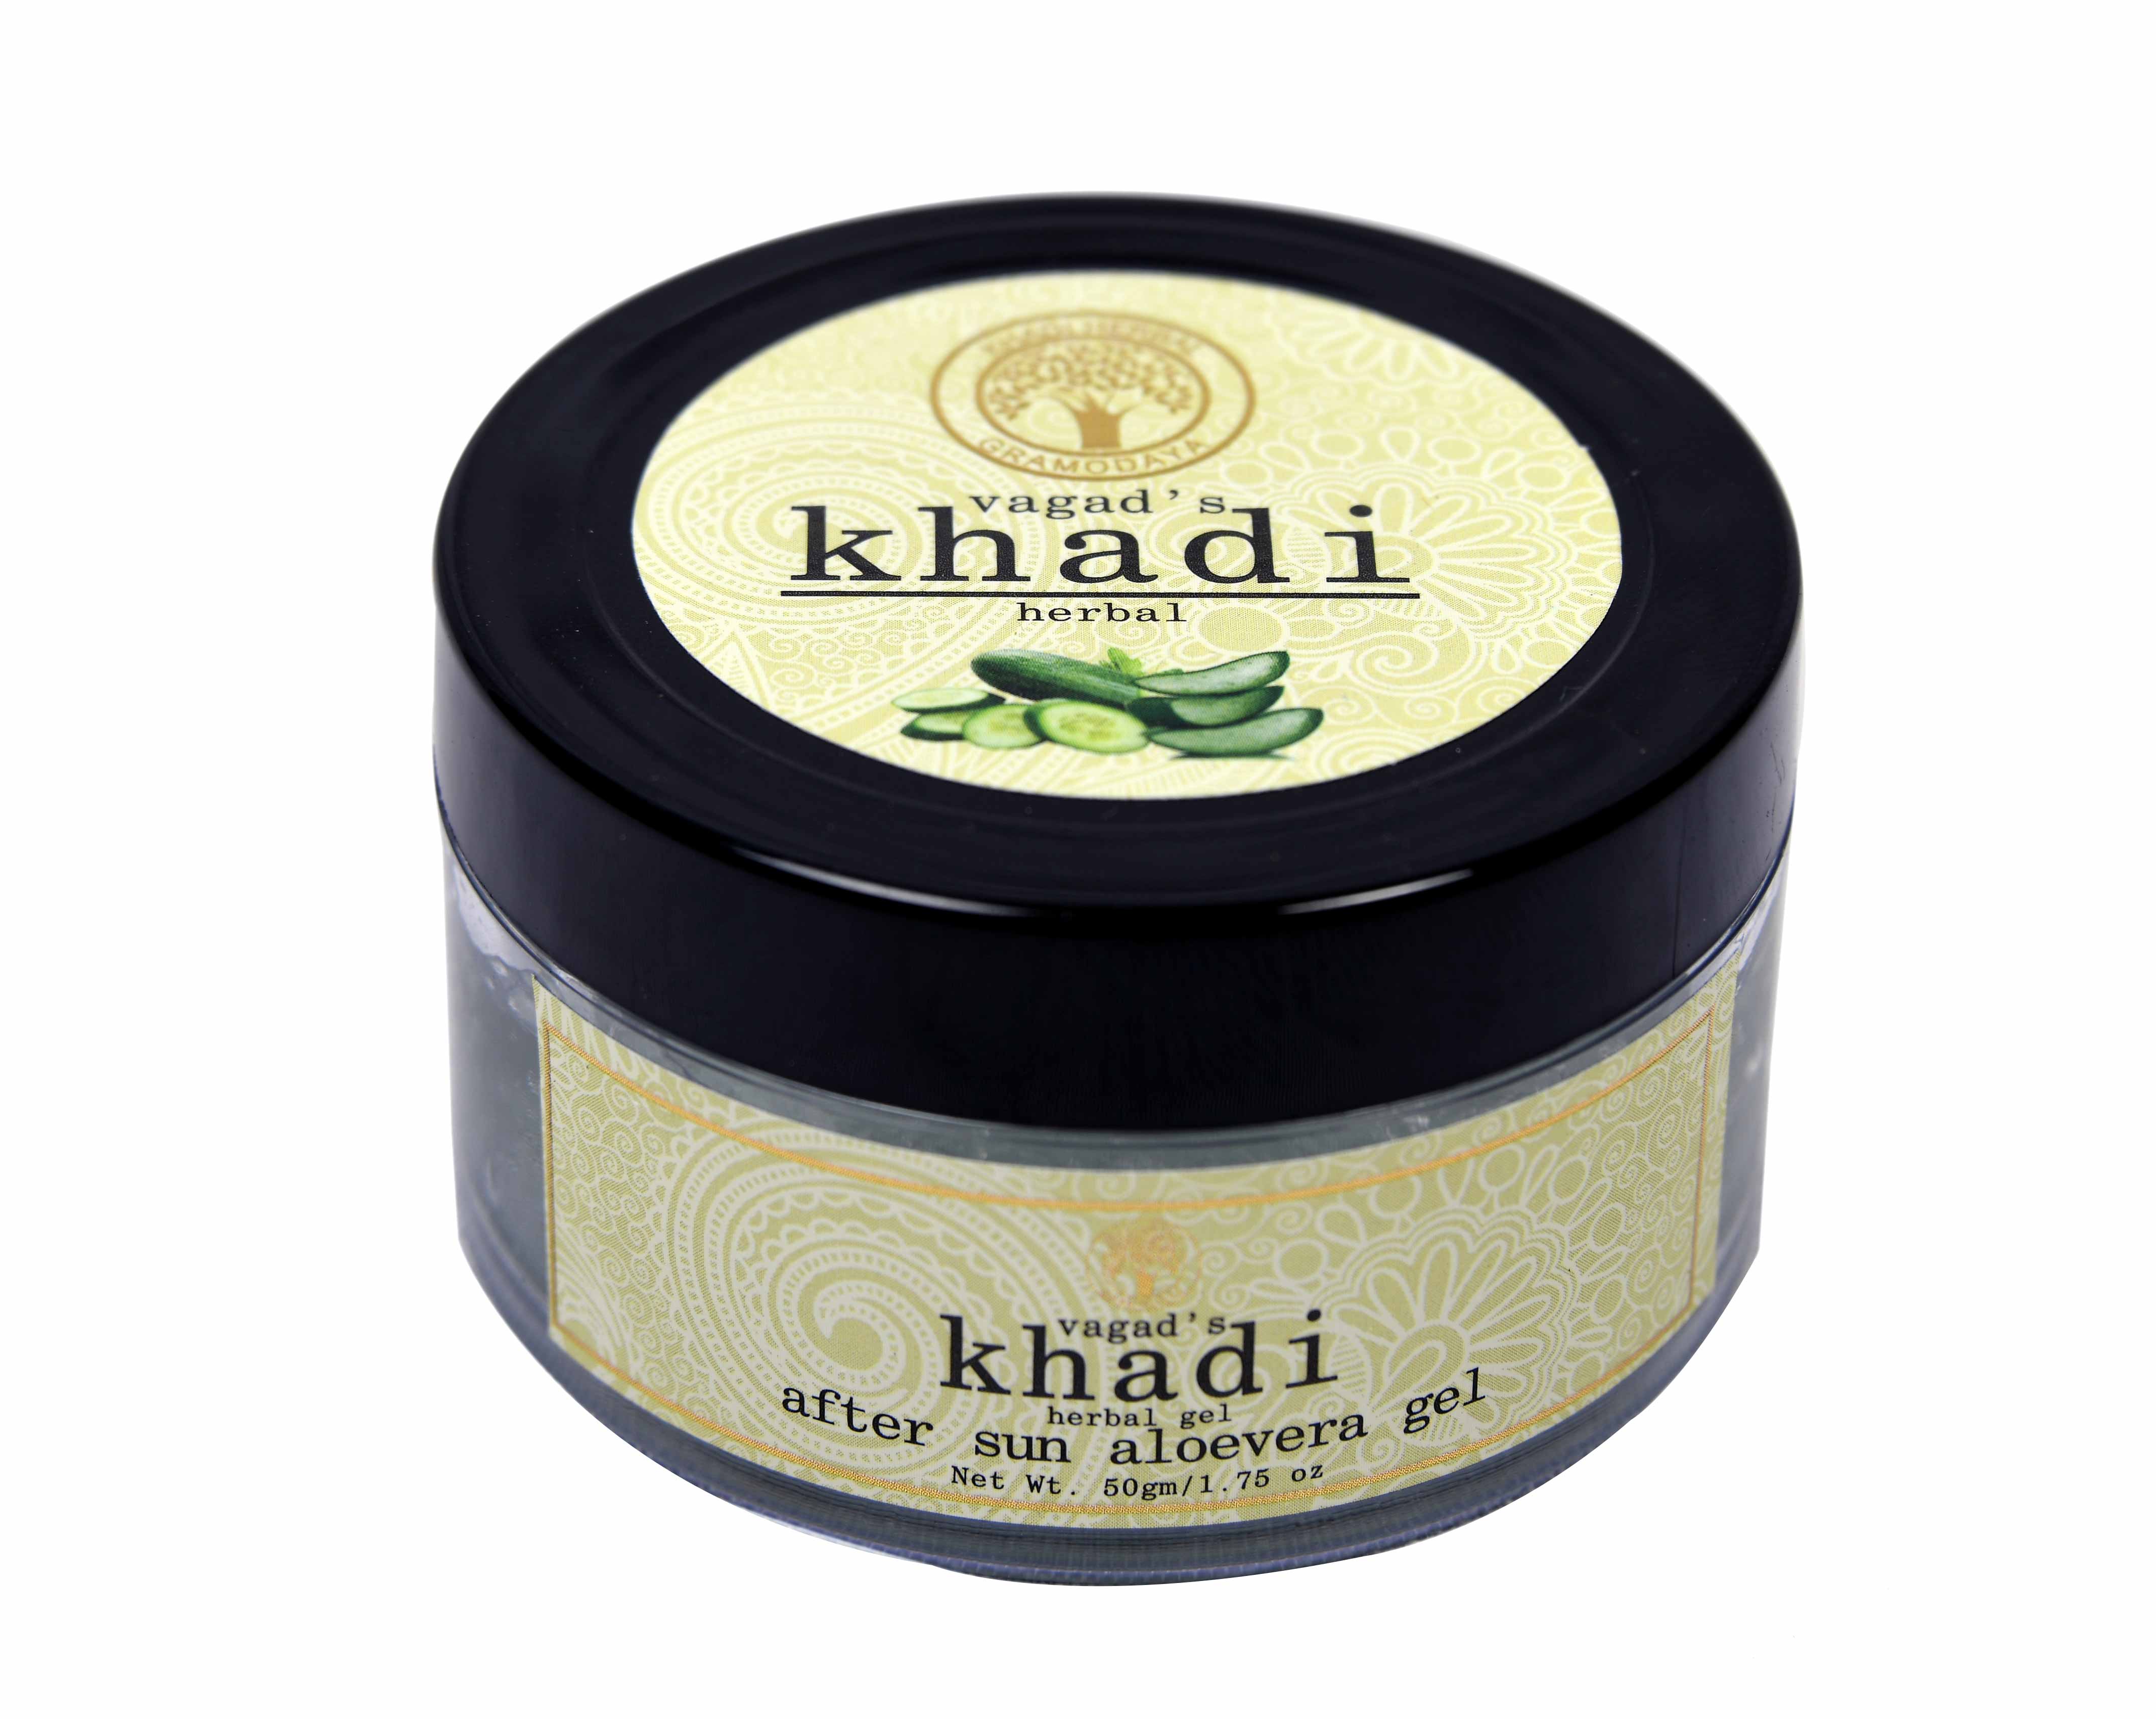 Buy Vagad's Khadi After Sun Aloevera Gel at Best Price Online